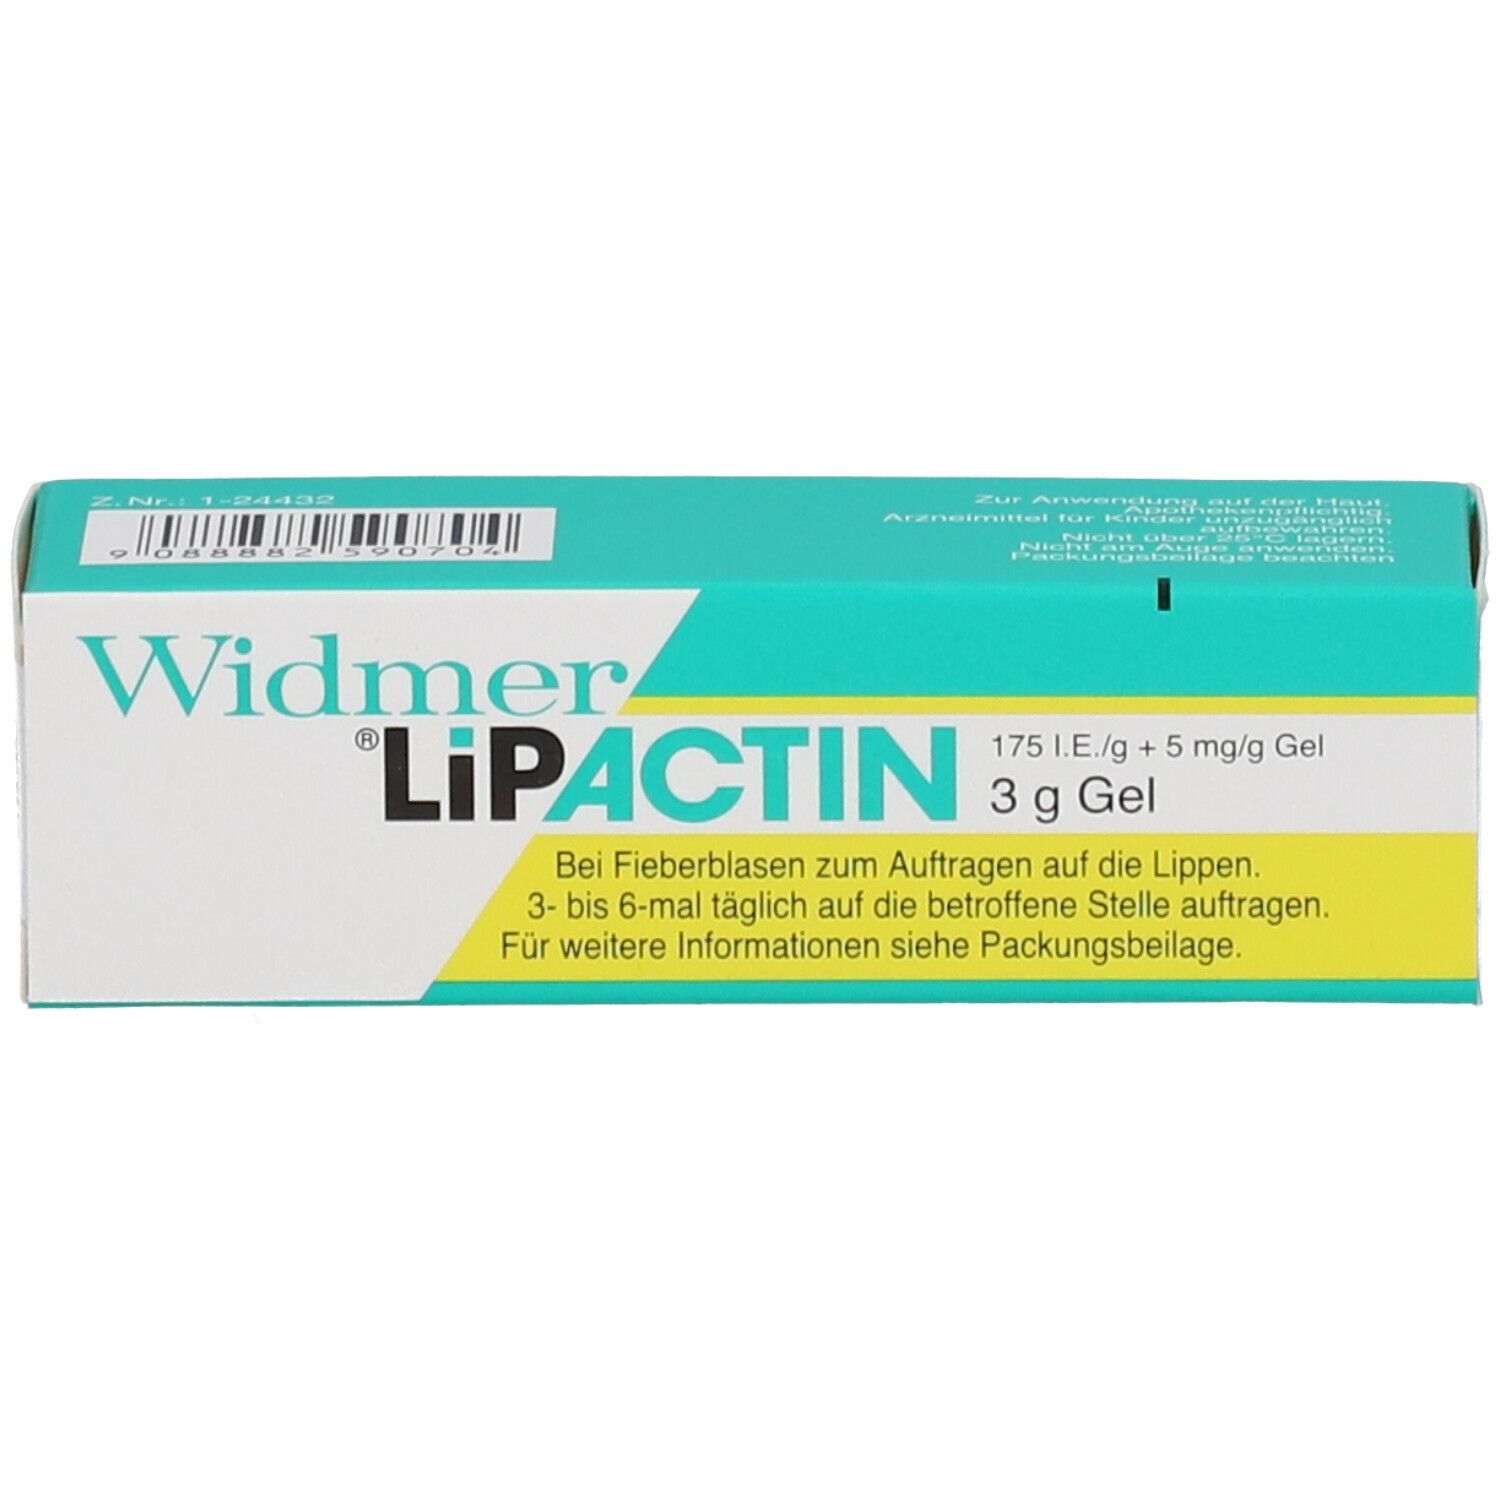 Widmer® Lipactin Gel